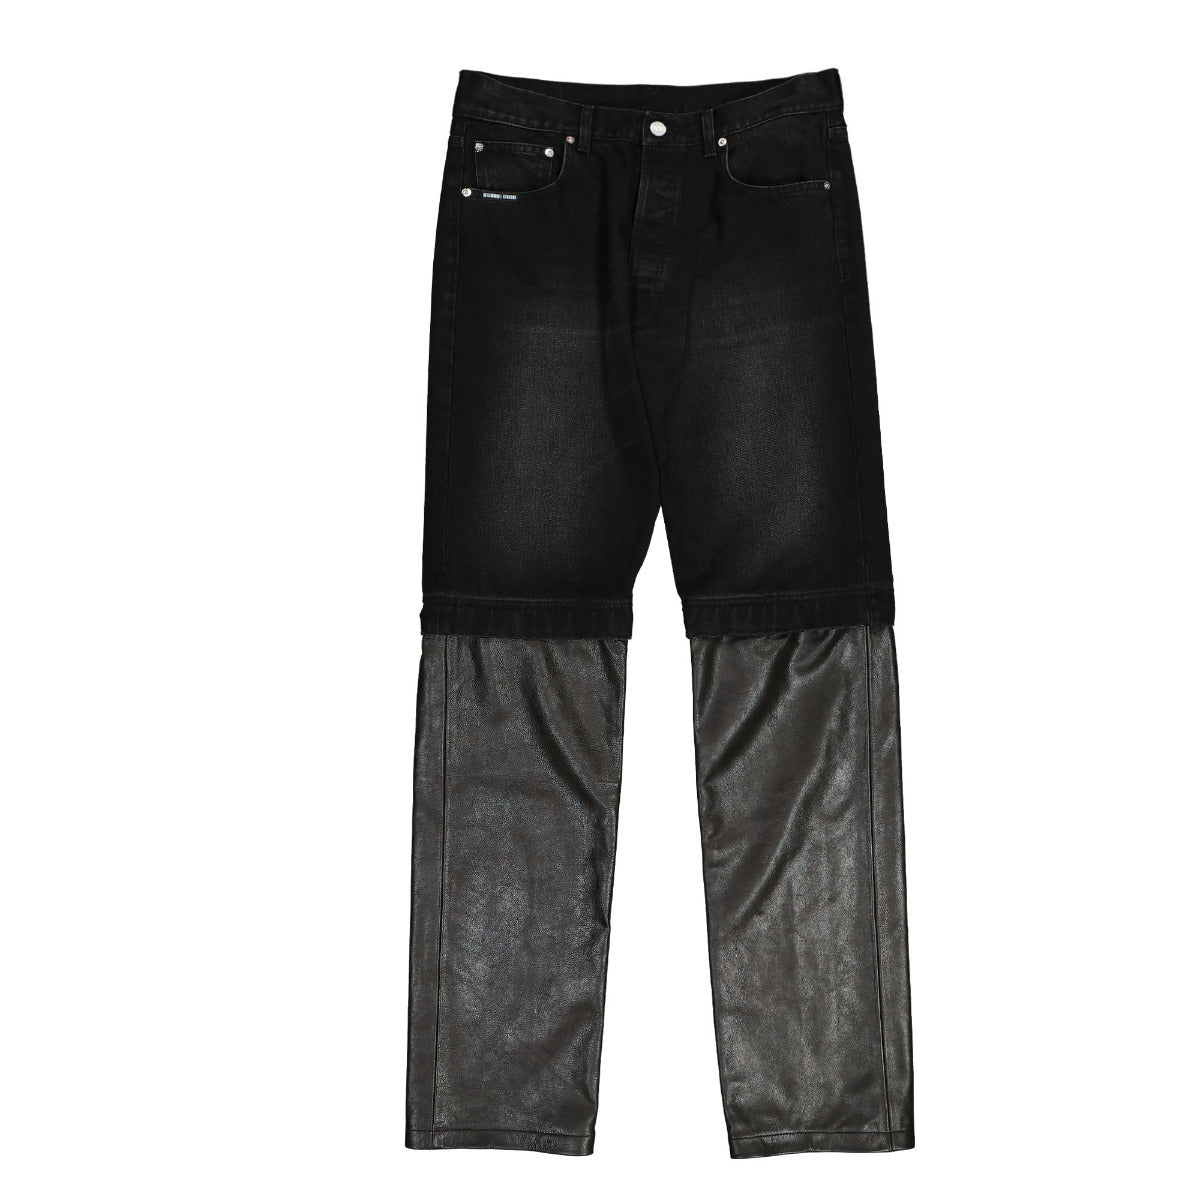 Leather / Denim Jeans